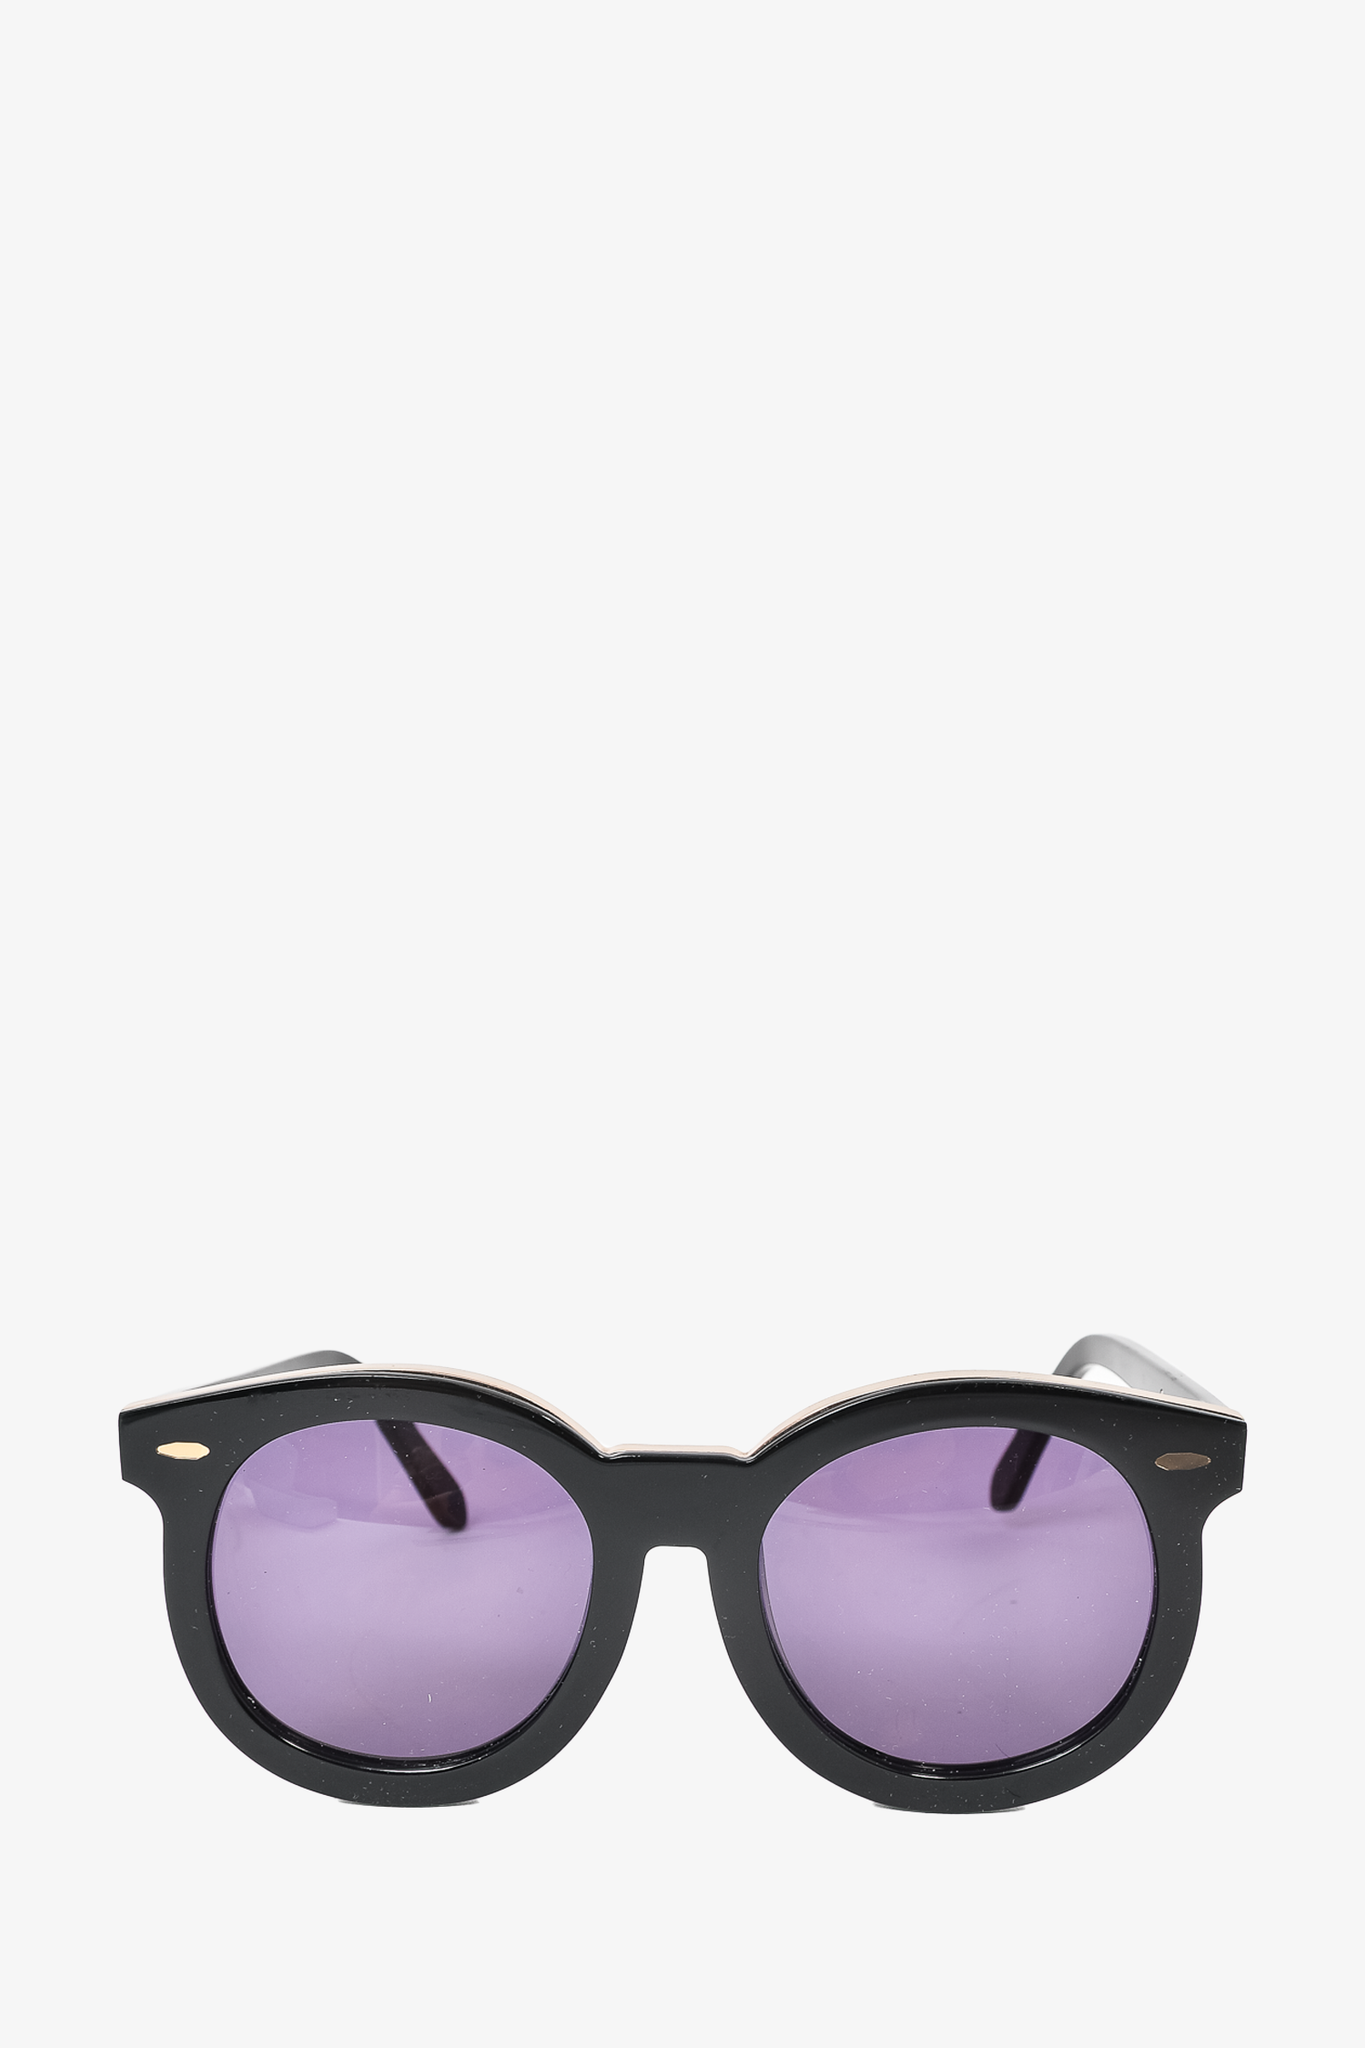 Karen Walker Black Sunglasses w/ Gold Arrow Sides